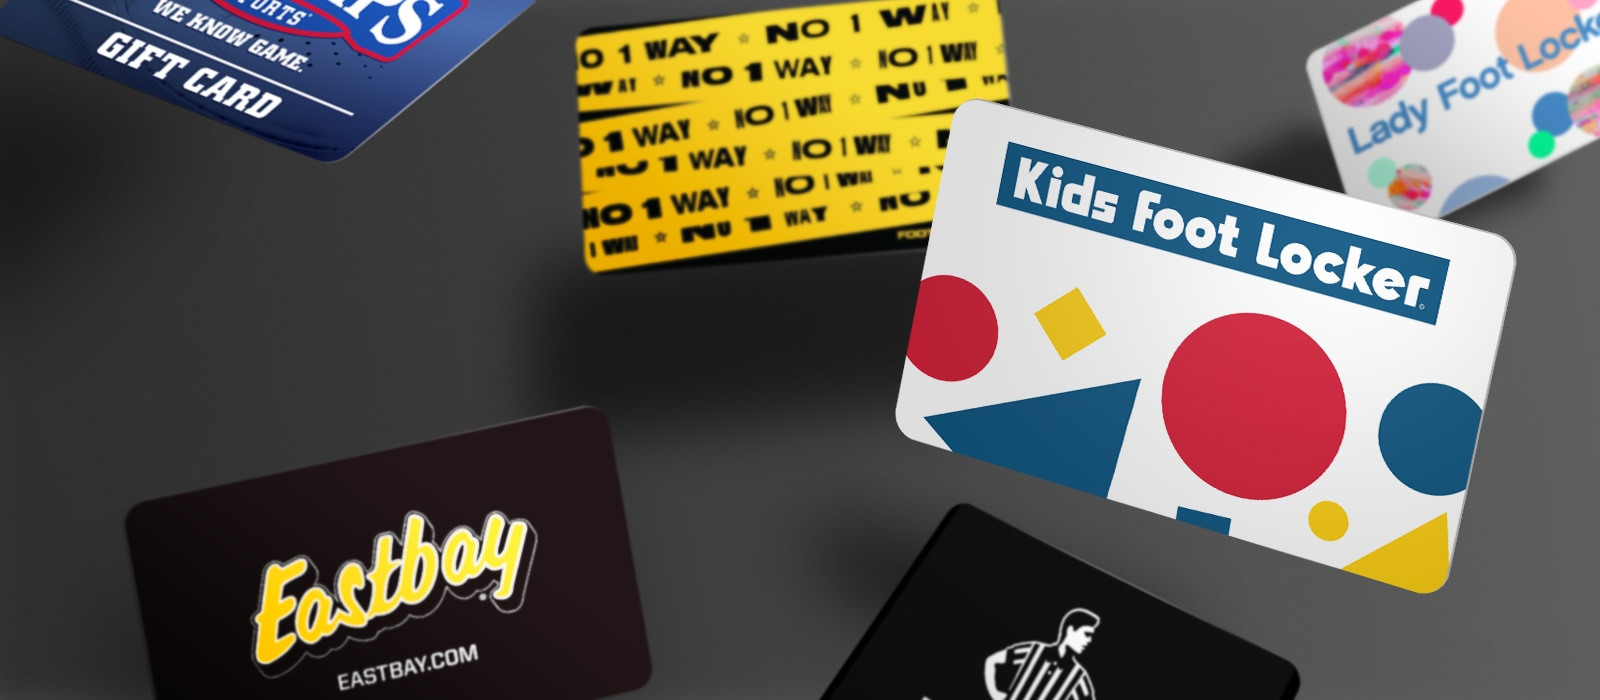 Kids Foot Locker Gift Cards
 Gift Cards